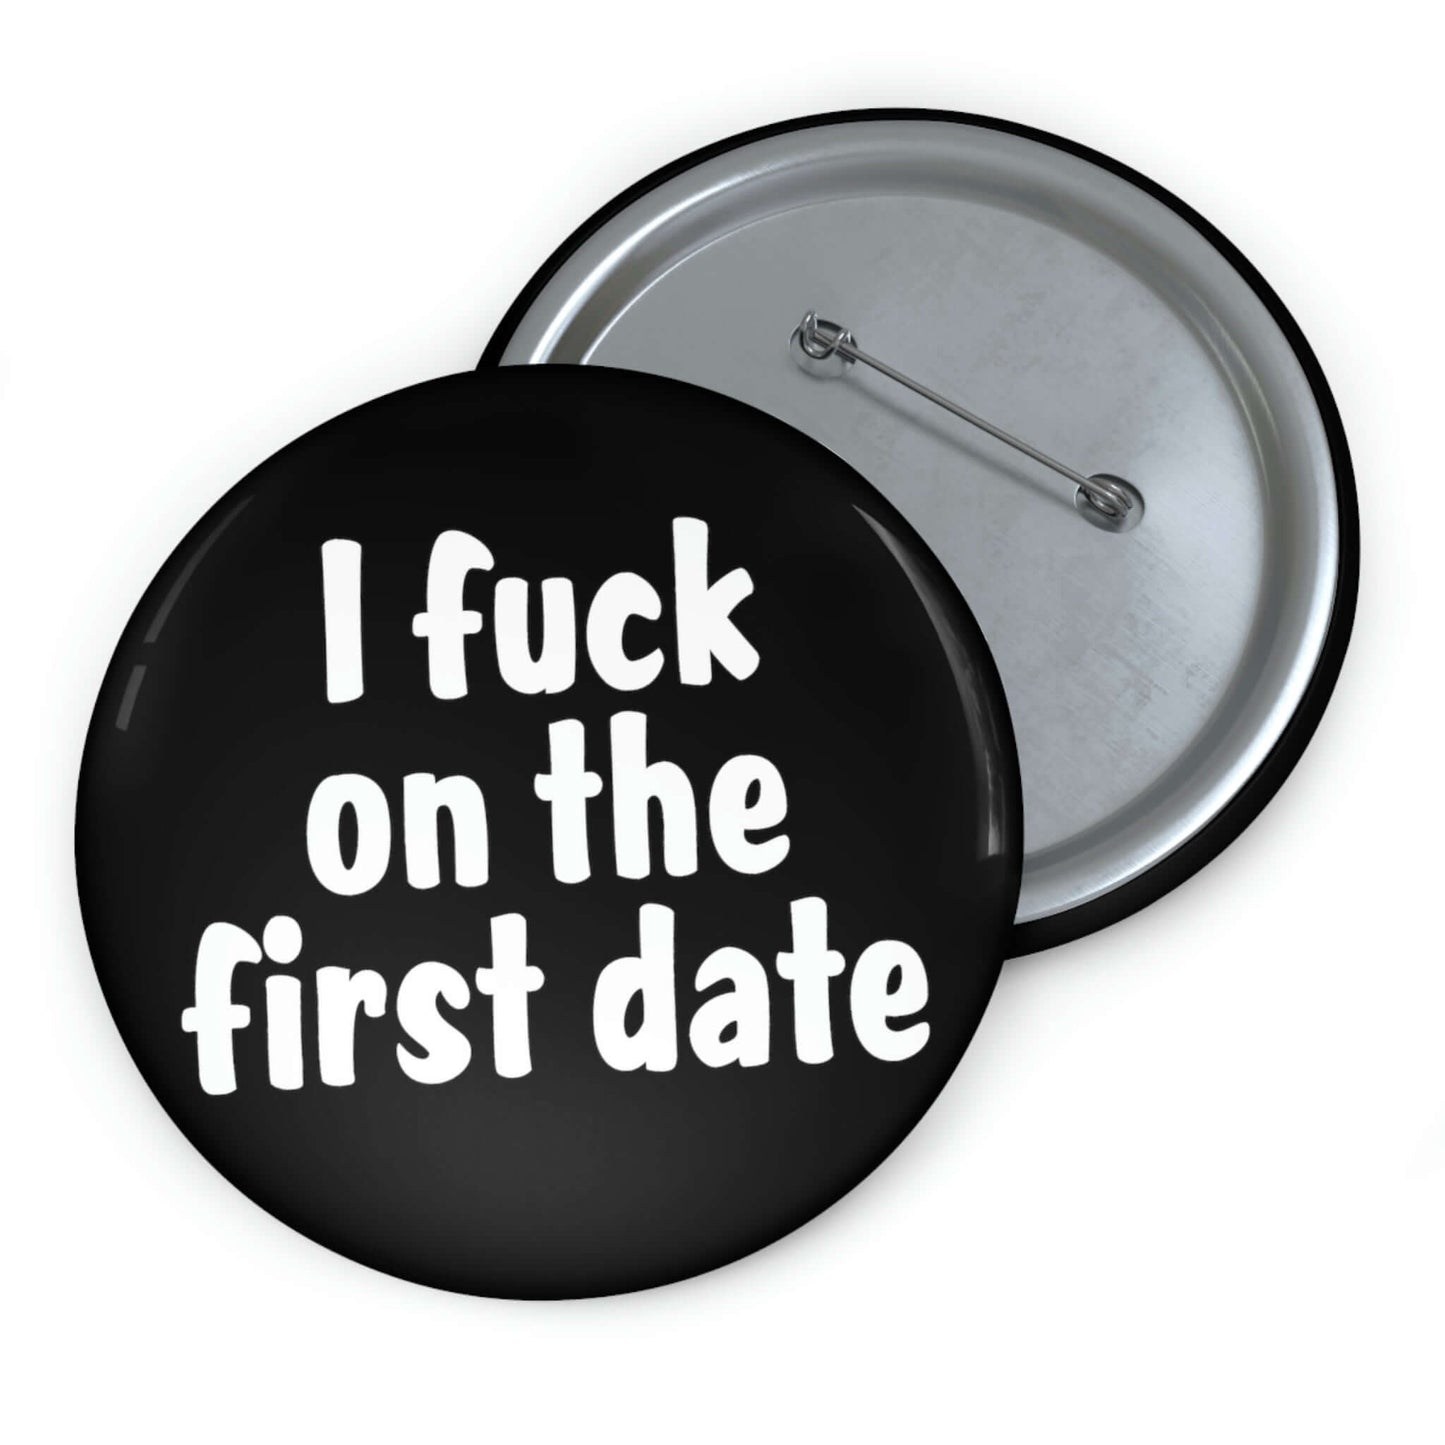 First date pinback button